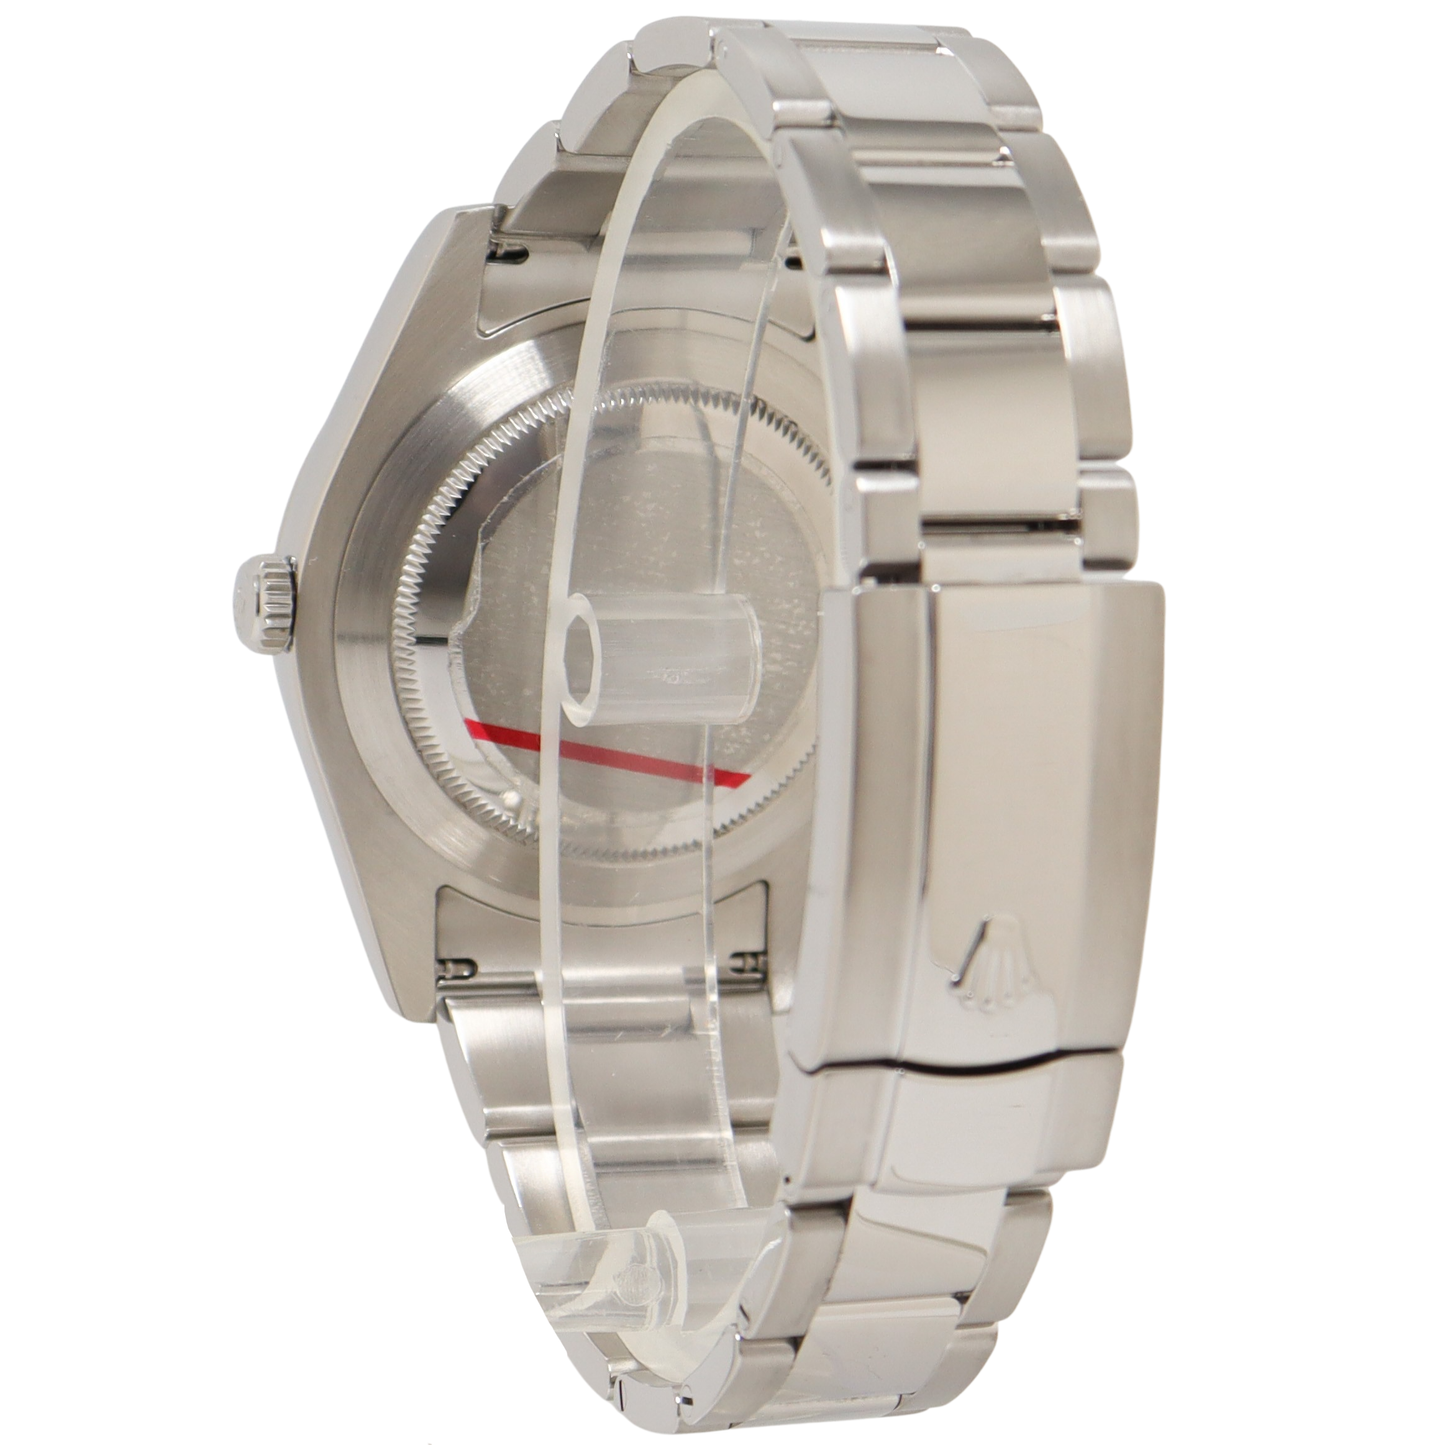 Rolex Datejust Stainless Steel 41mm Black Stick Dial Watch Reference# 116334 - Happy Jewelers Fine Jewelry Lifetime Warranty